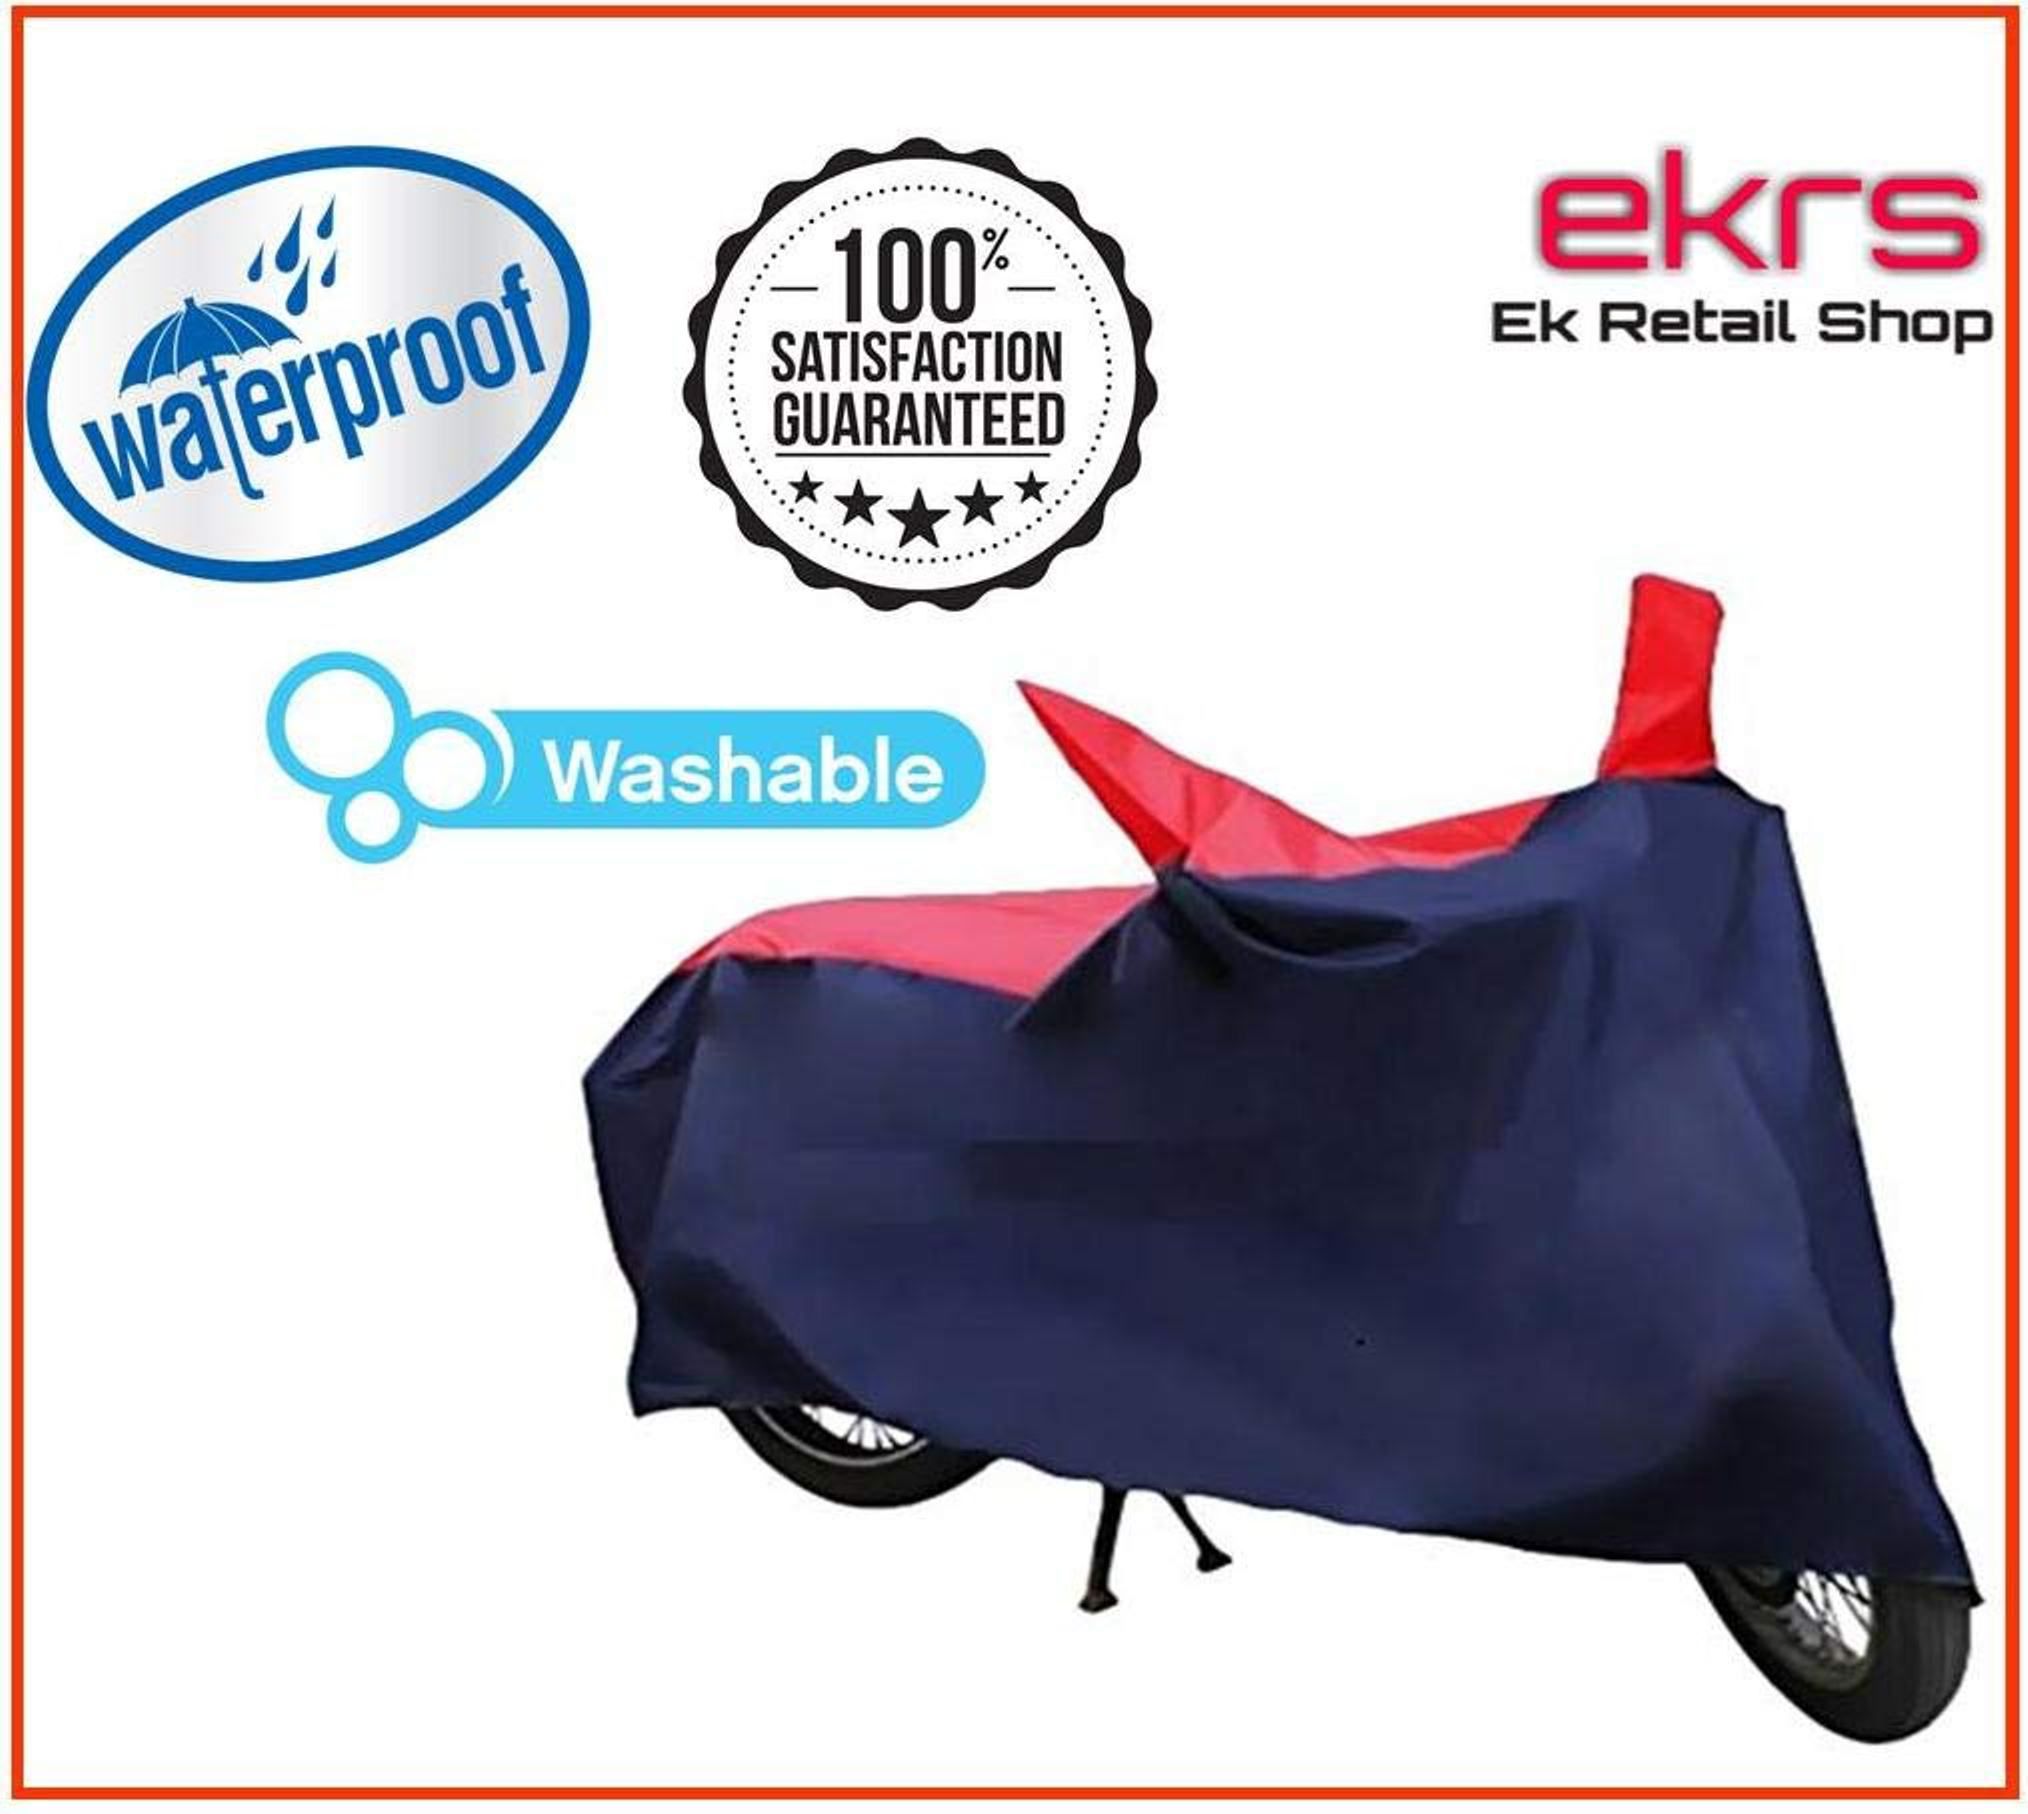 Ek Retail Shop Silver Matty Waterproof Bike Body Cover for Bajaj Avenger Street 220